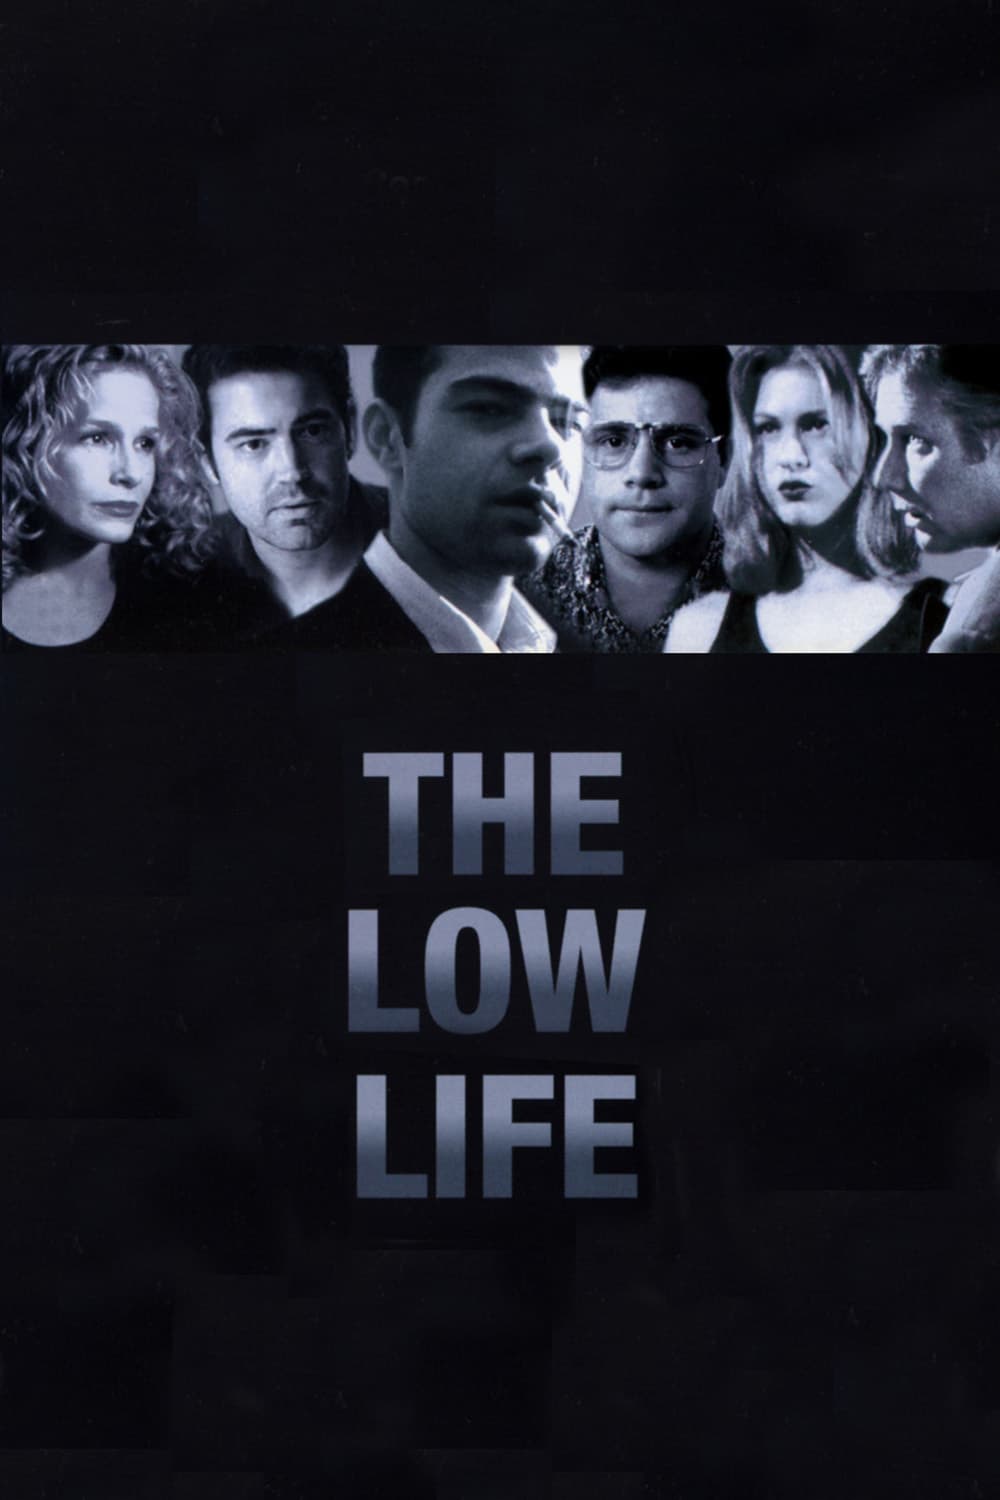 Plakat von "The Low Life"